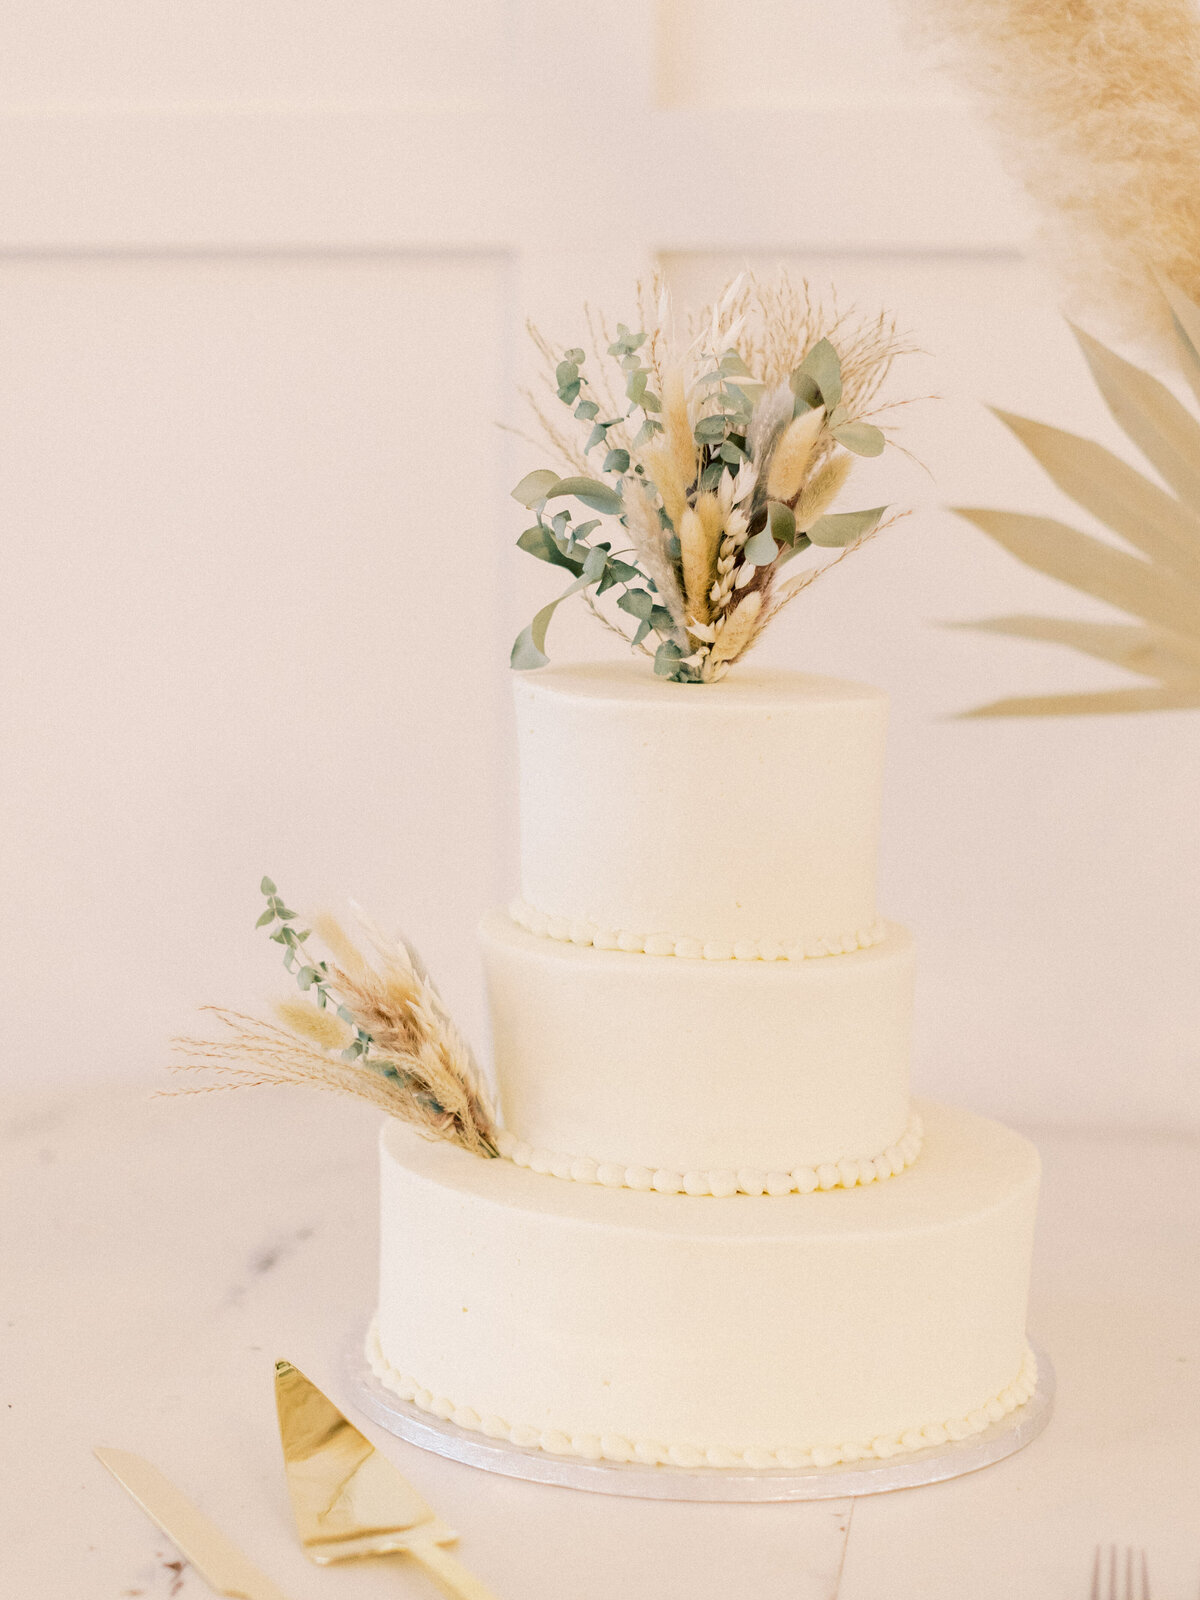 Prianka + Alex - Hindu Wedding 15- Reception - details 9 - Simple butter cream cake